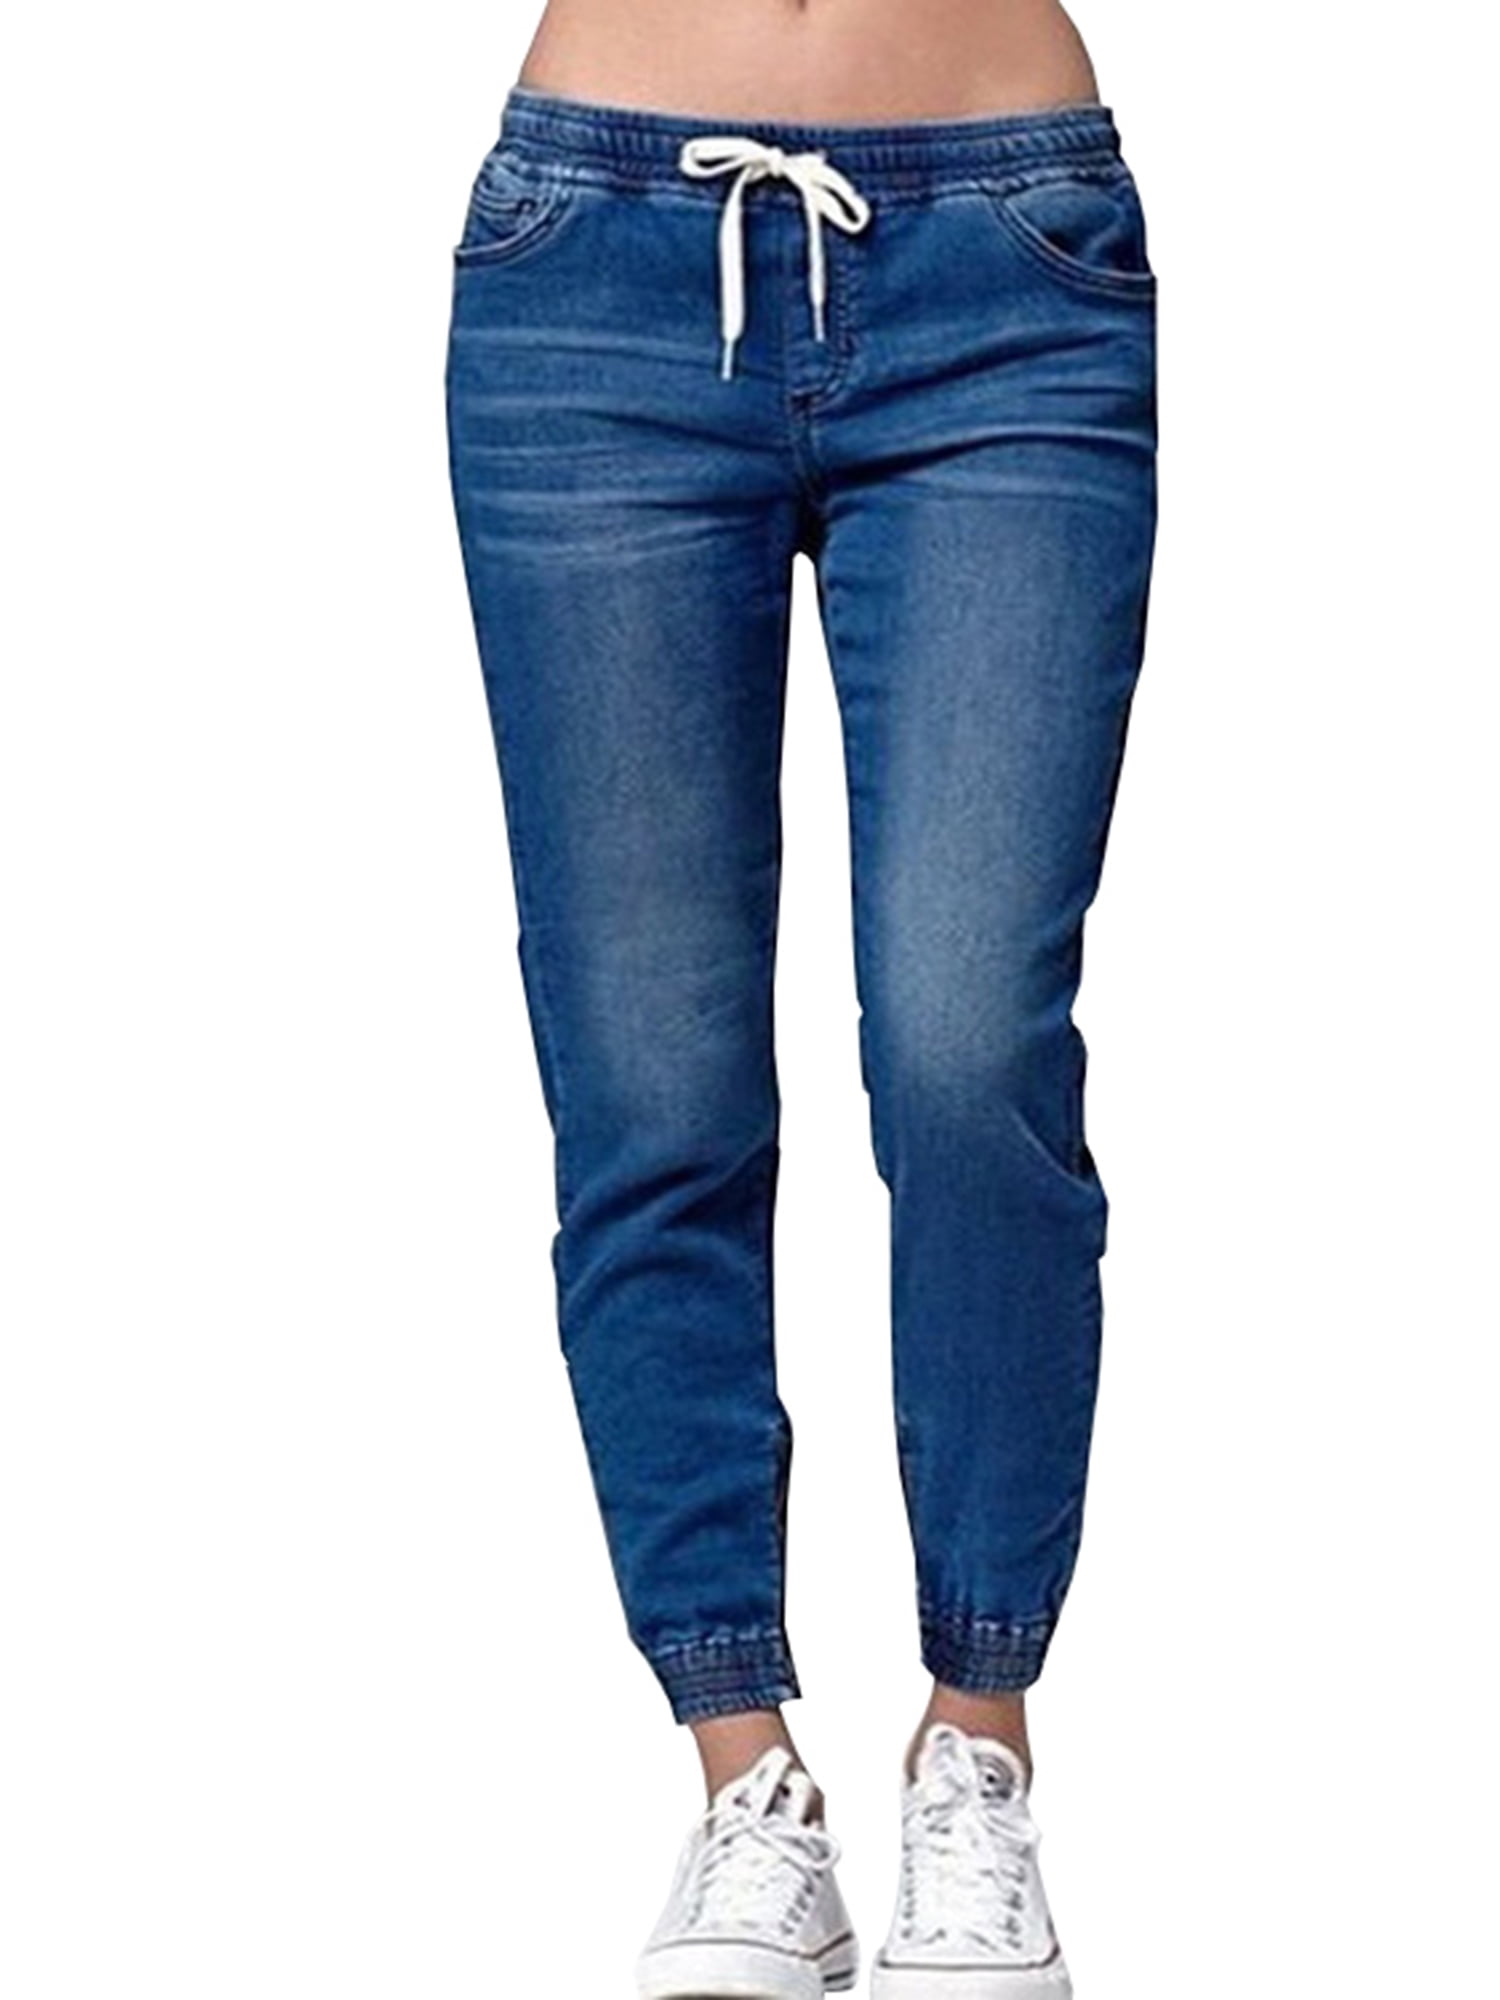 Size Jeans for Women Mid Rise Slim Fit Joggers Denim Pants Casual Jeggings Drawstring Stretch Pants S-5XL Dark Blue - Walmart.com